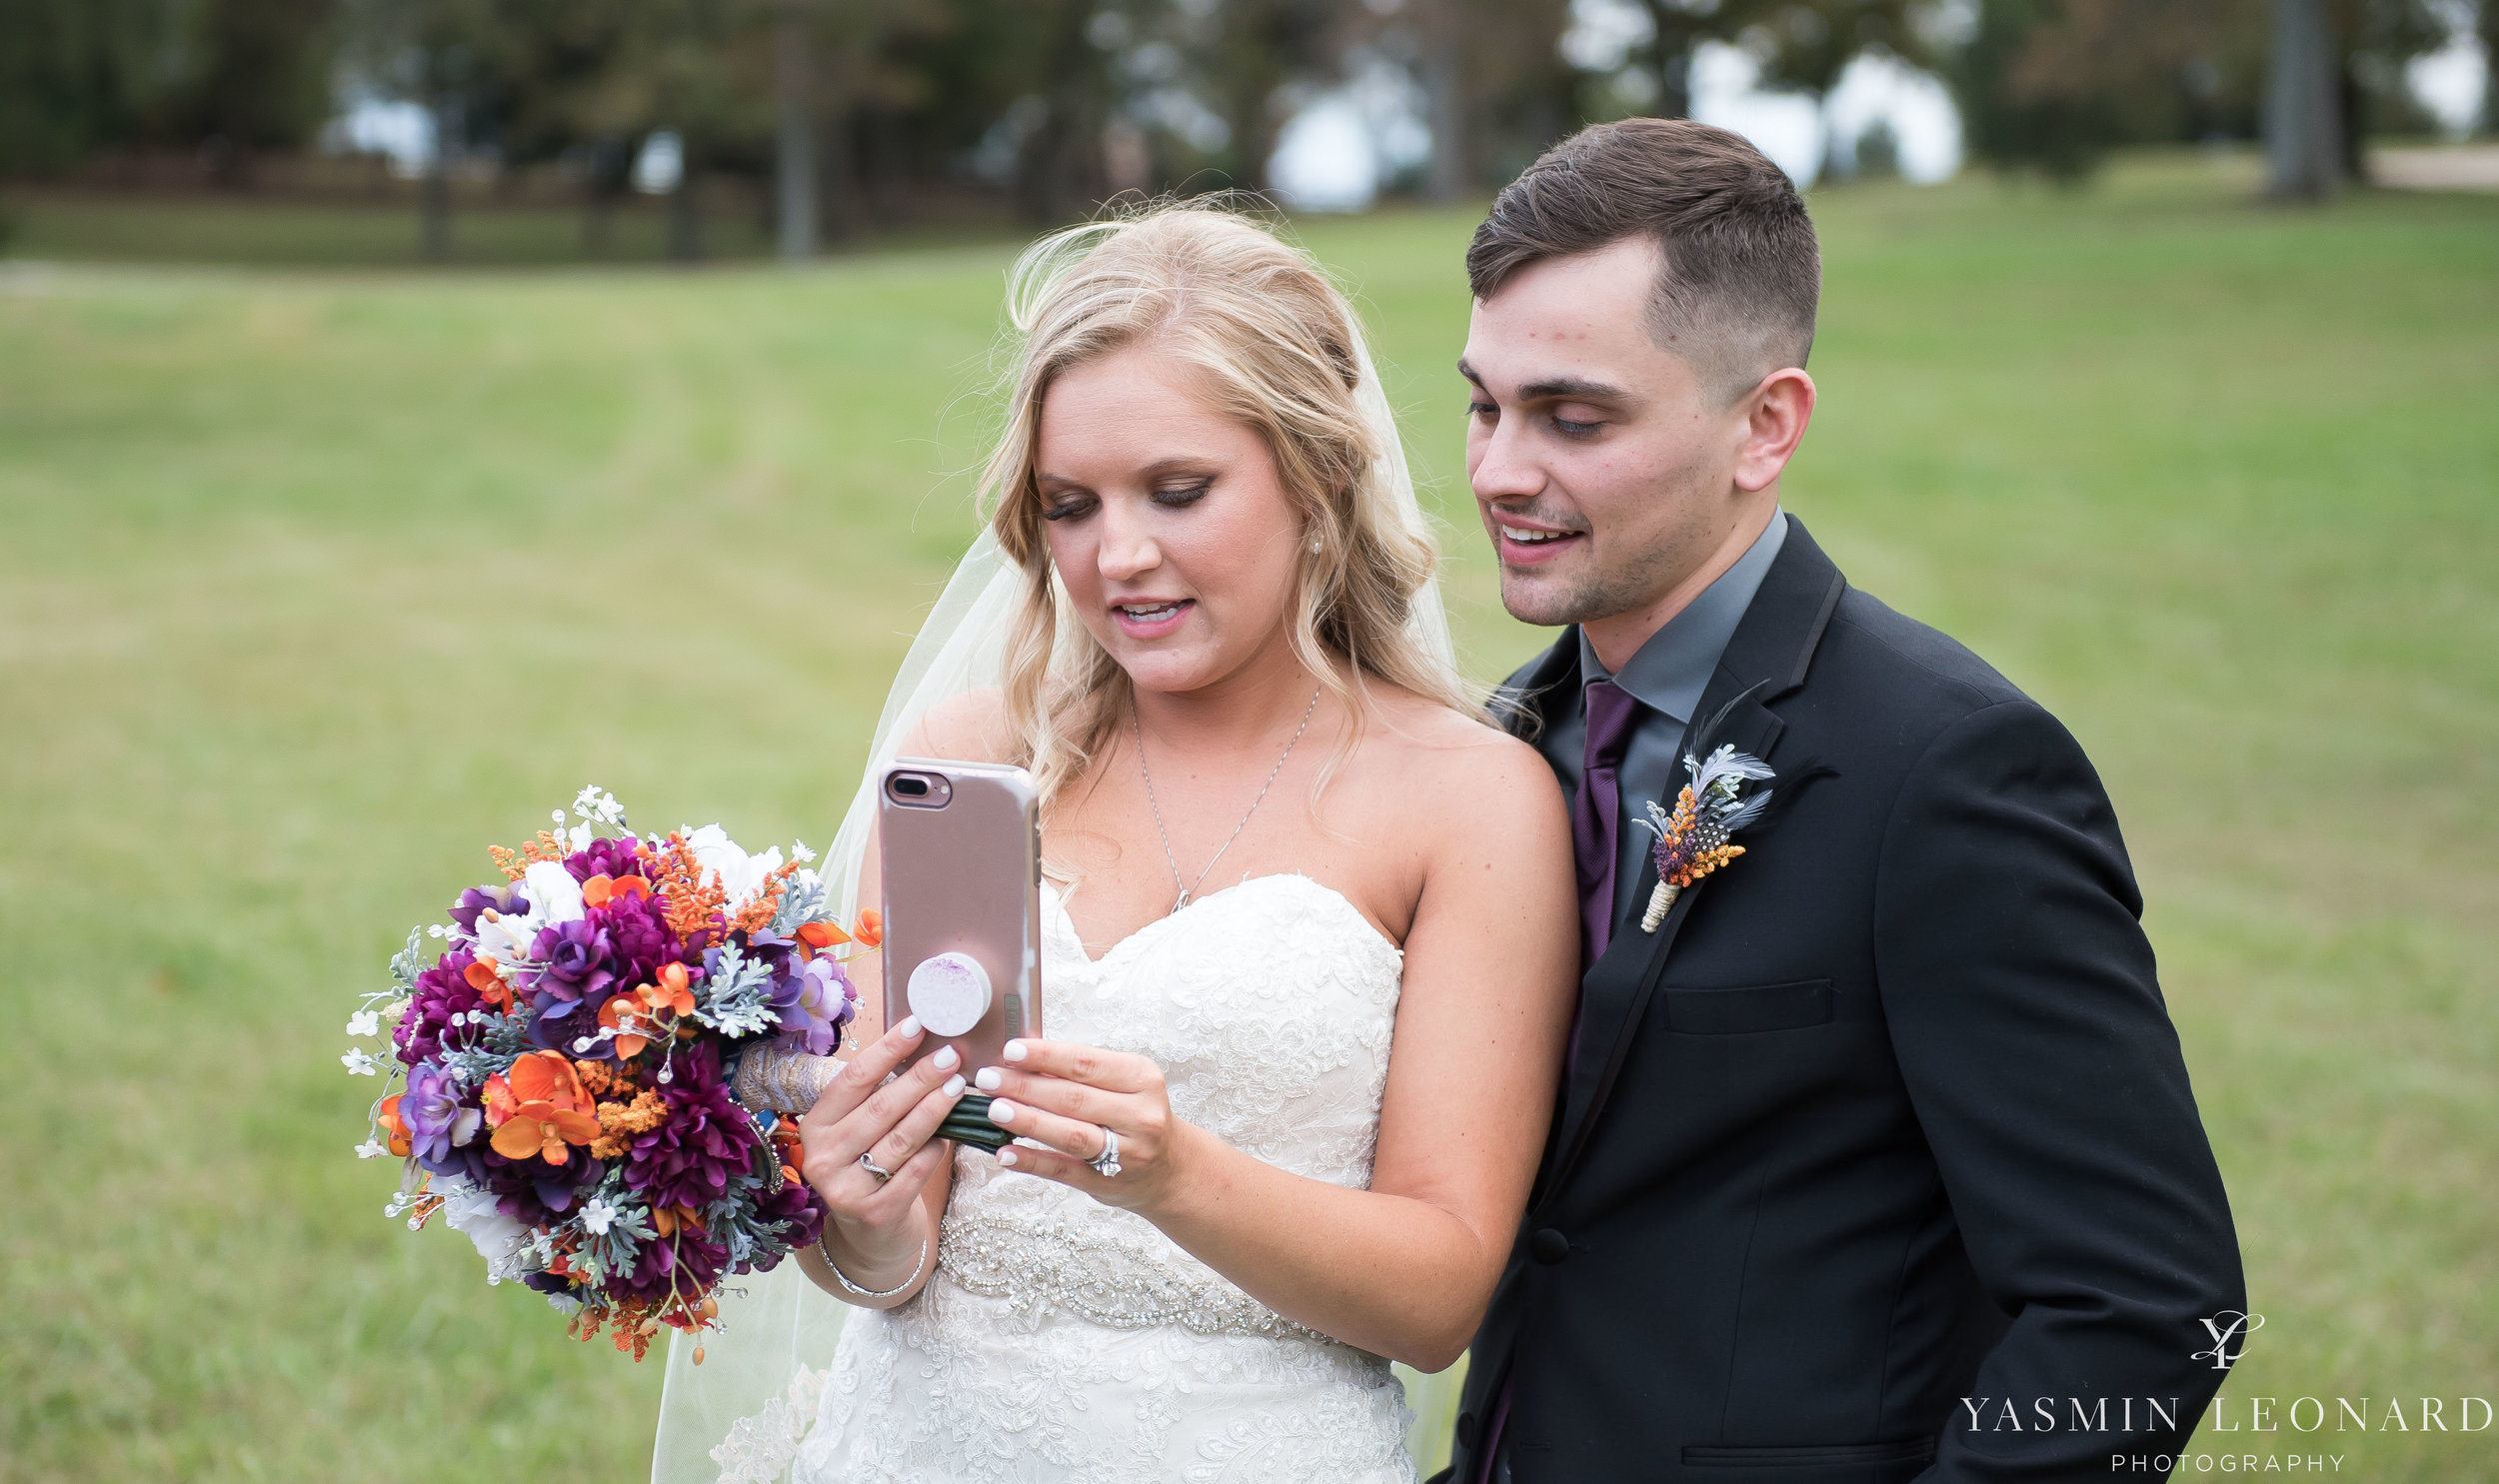 NC Wedding Photographer - Yasmin Leonard Photography - Summerfield Farms - High Point Wedding Photographer - Labri at Linwood - Barns in North Carolina - NC Barn Wedding-35.jpg